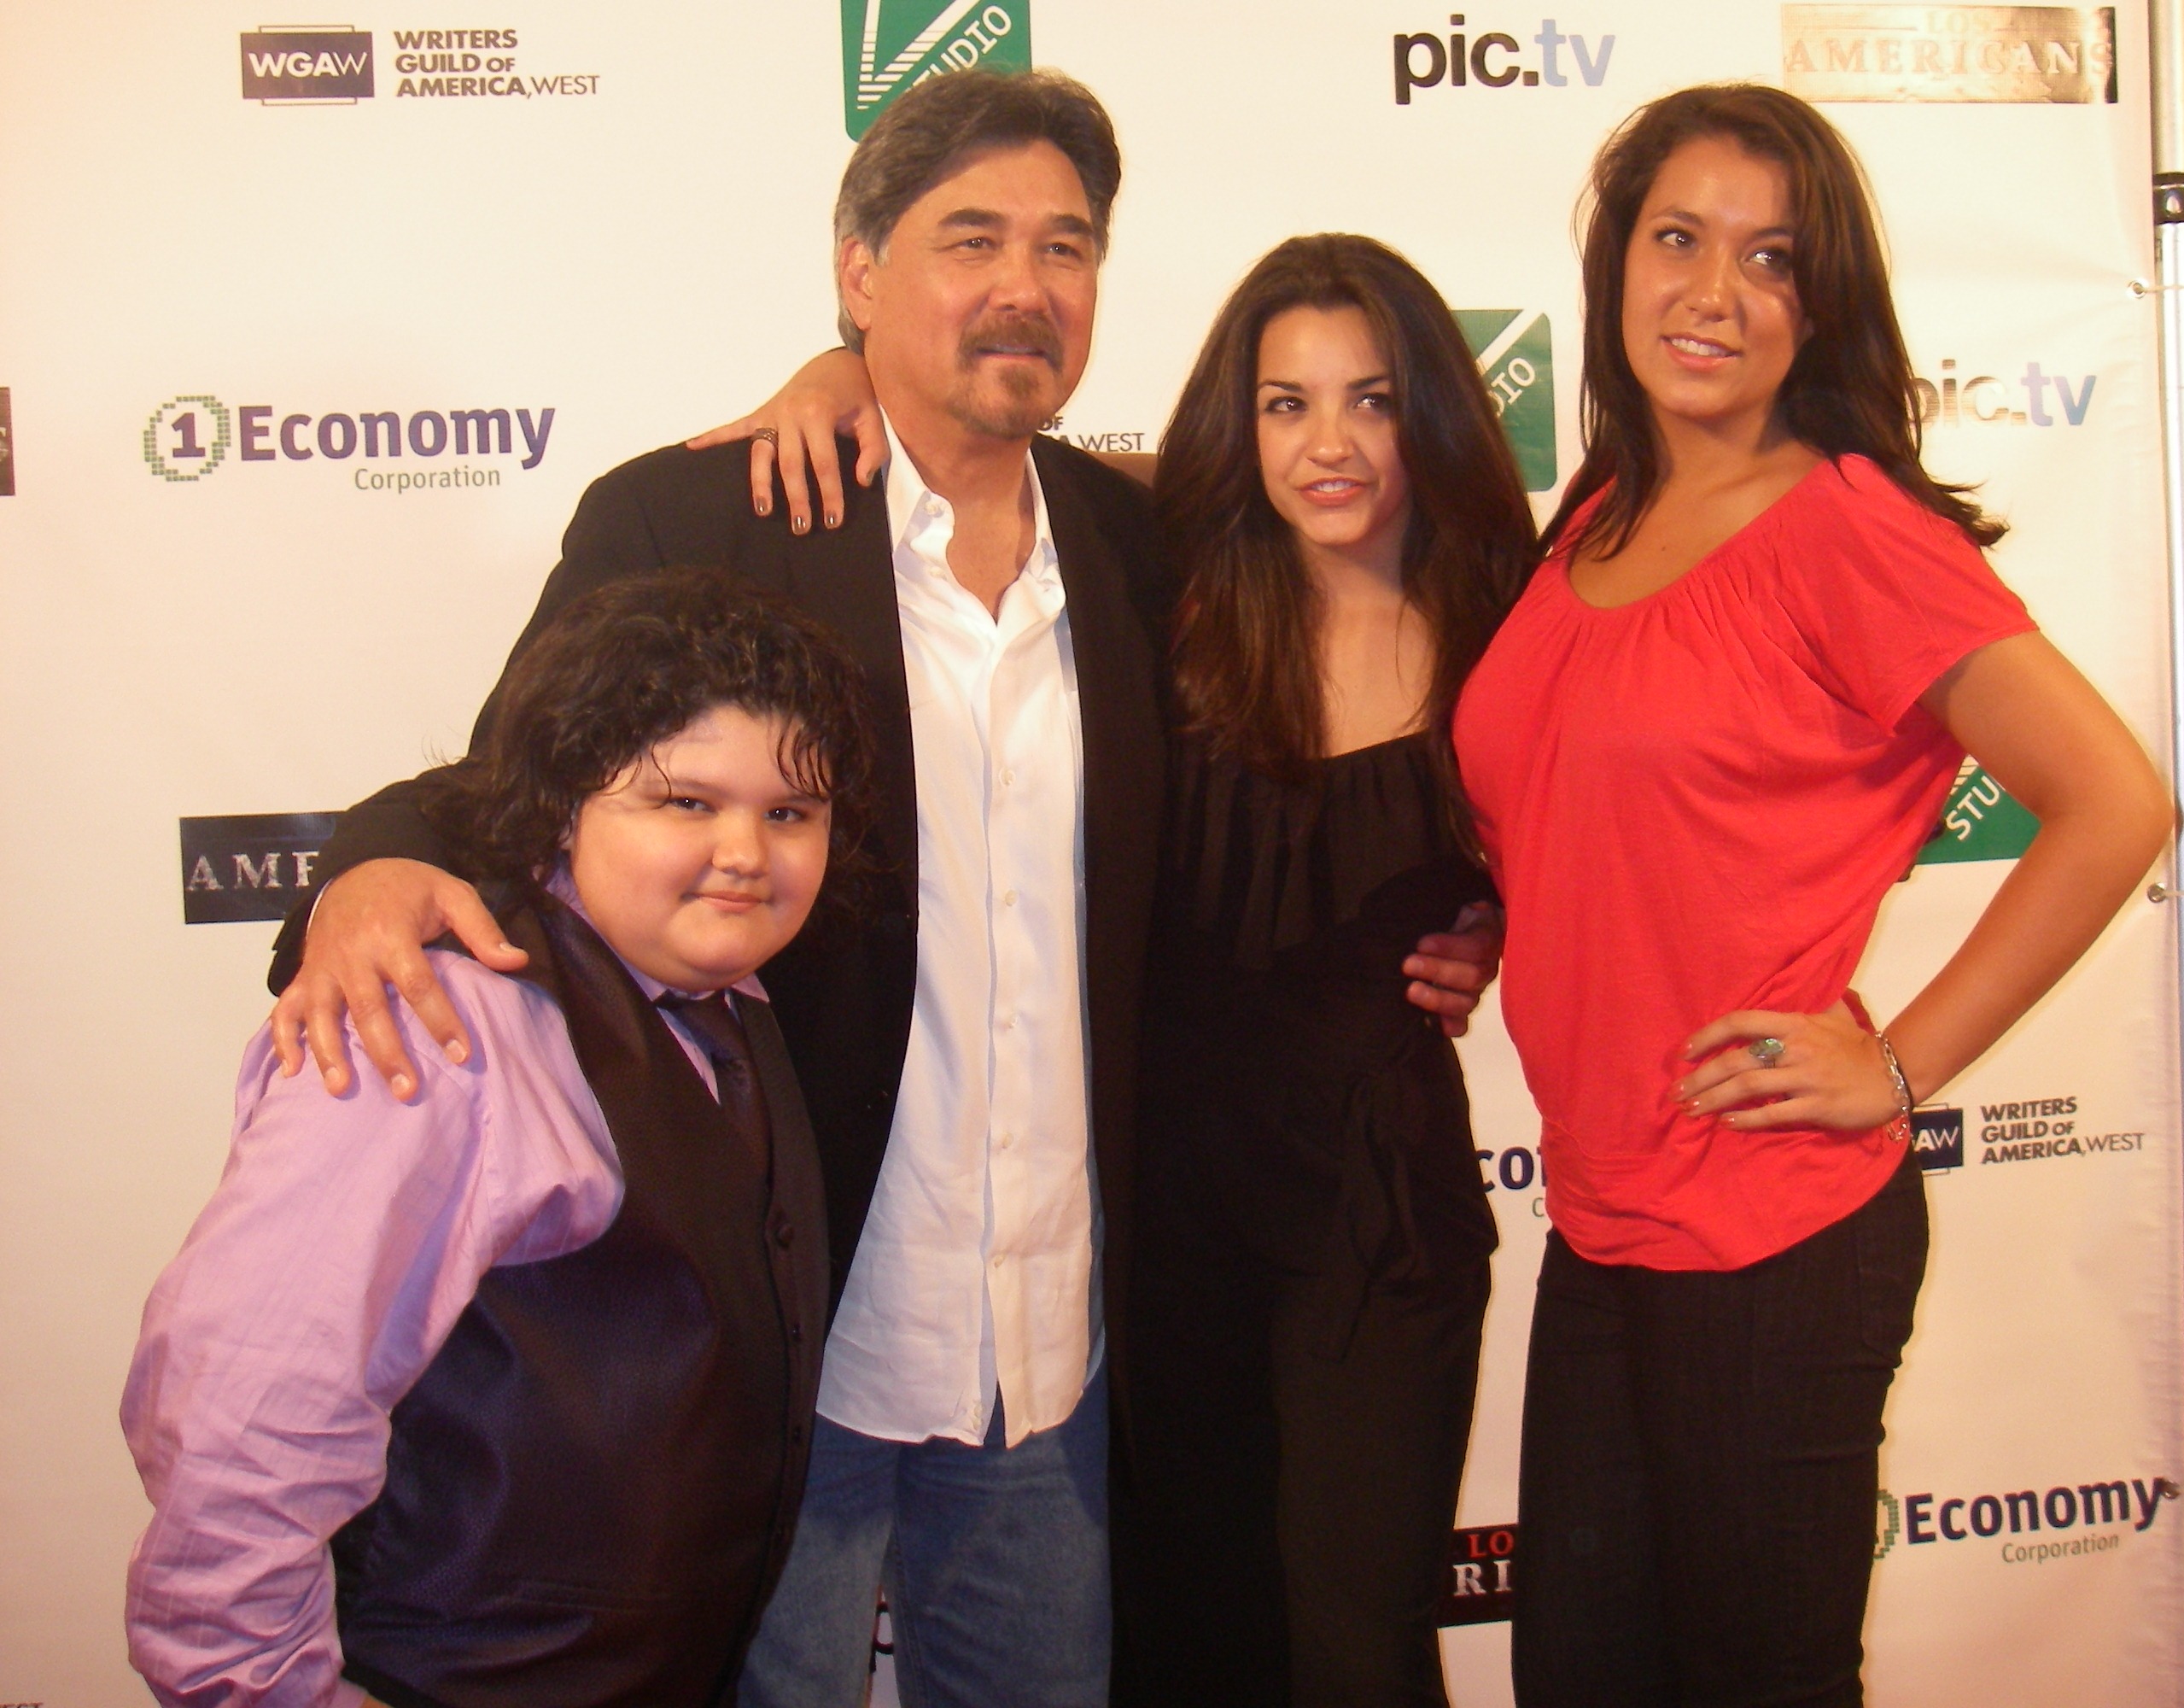 Los Americans Writer's Guild Premiere 2011